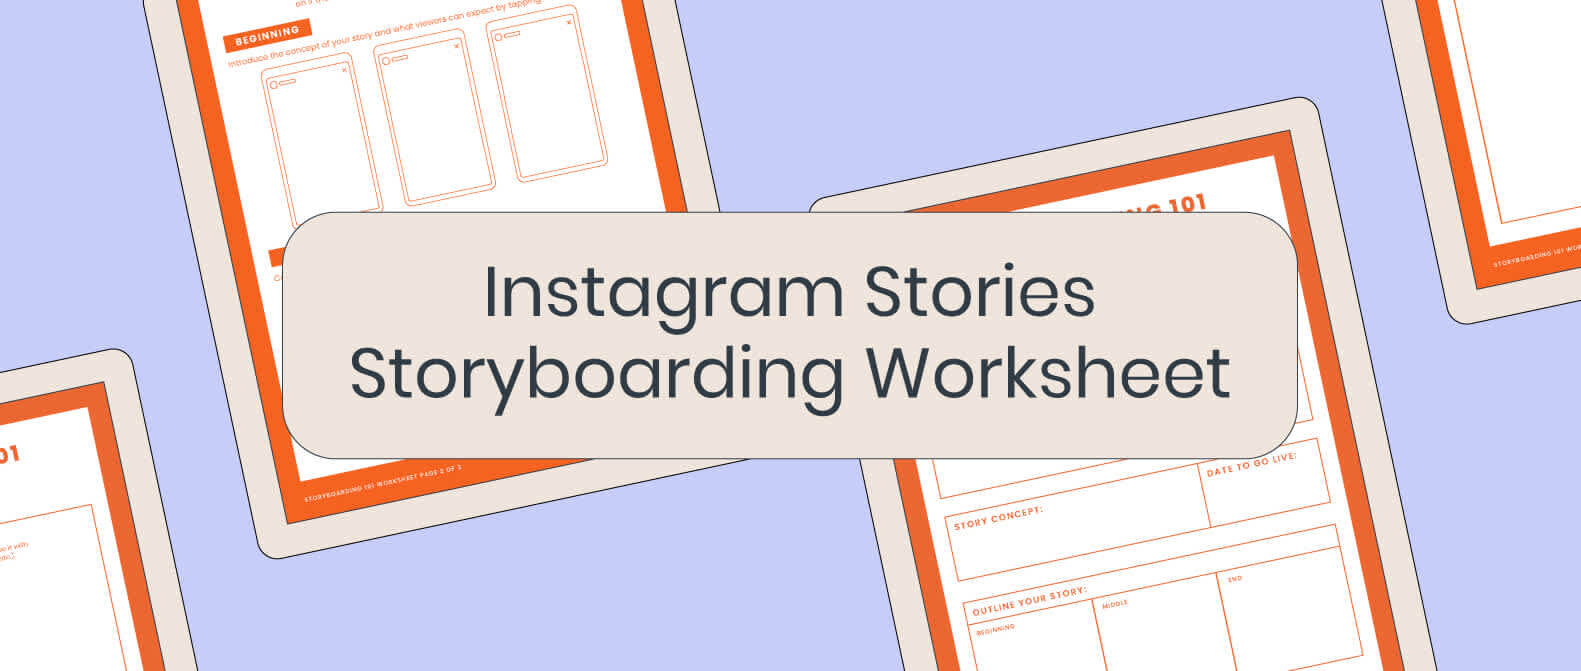 Header image reading Instagram Stories Storyboarding worksheet with background graphics of worksheet